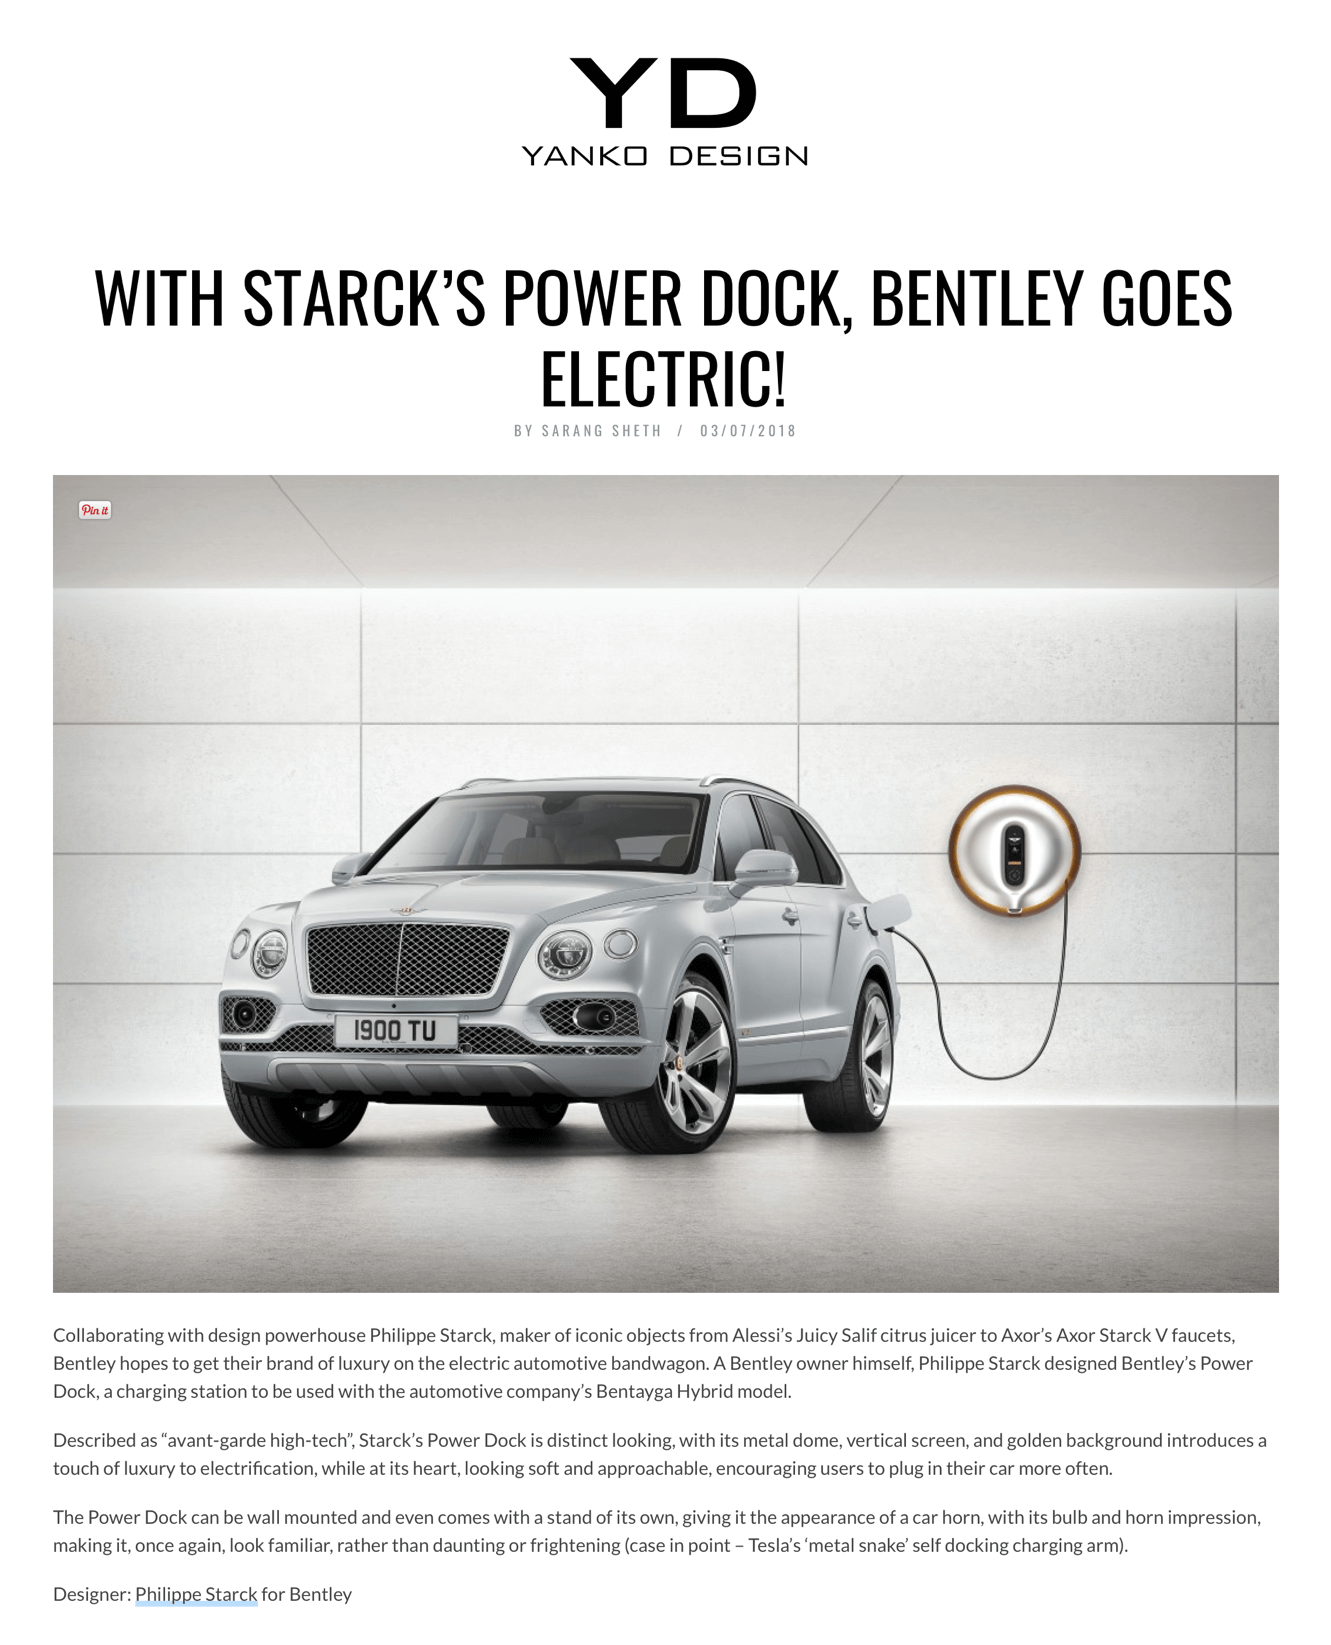 With Starck's Power Dock, Bentley goes electric!